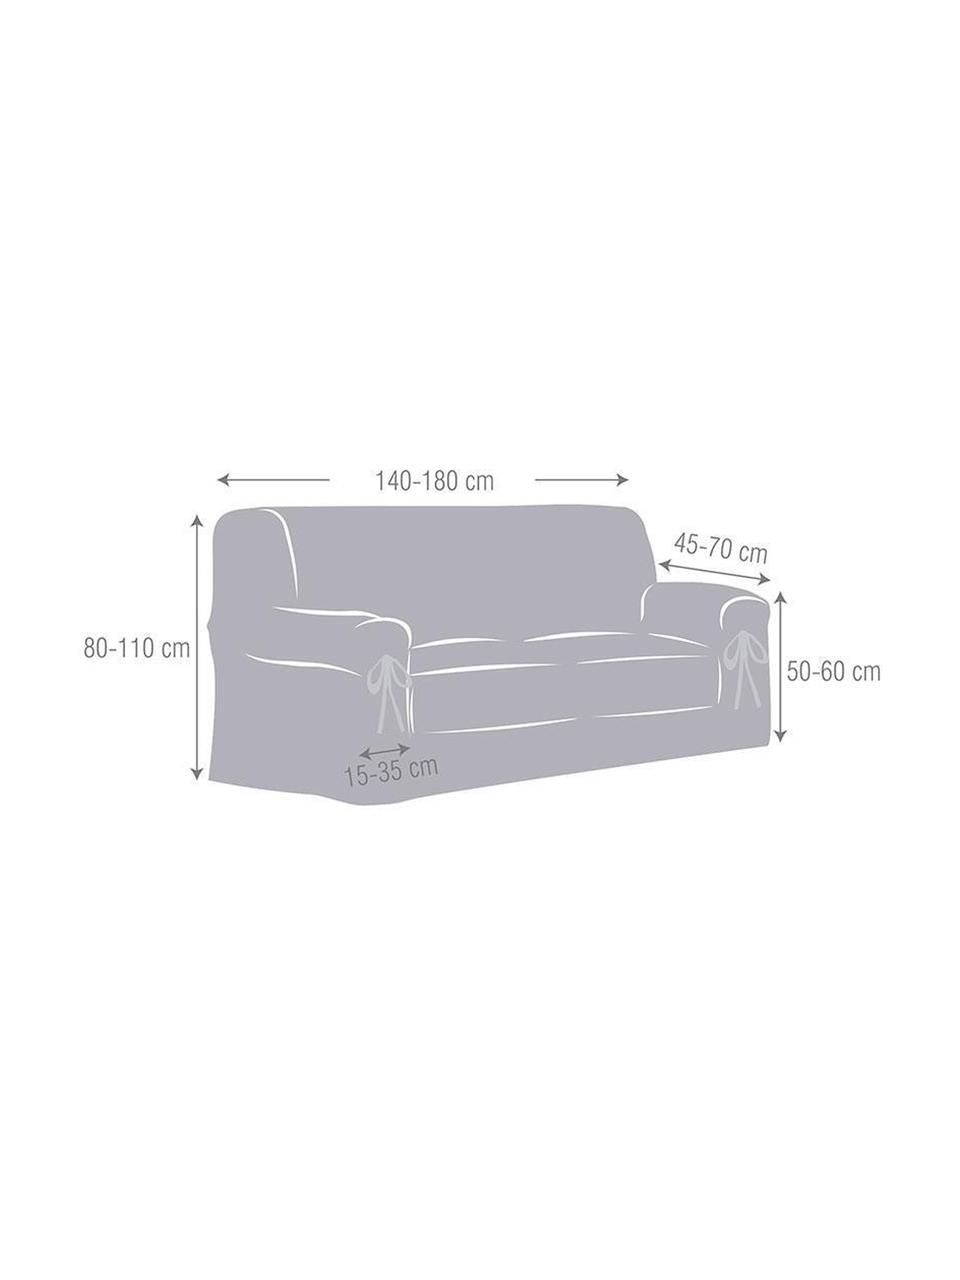 Funda de sofá Bianca, 100% algodón, Crema, 2 plazas (160 x 110 cm)